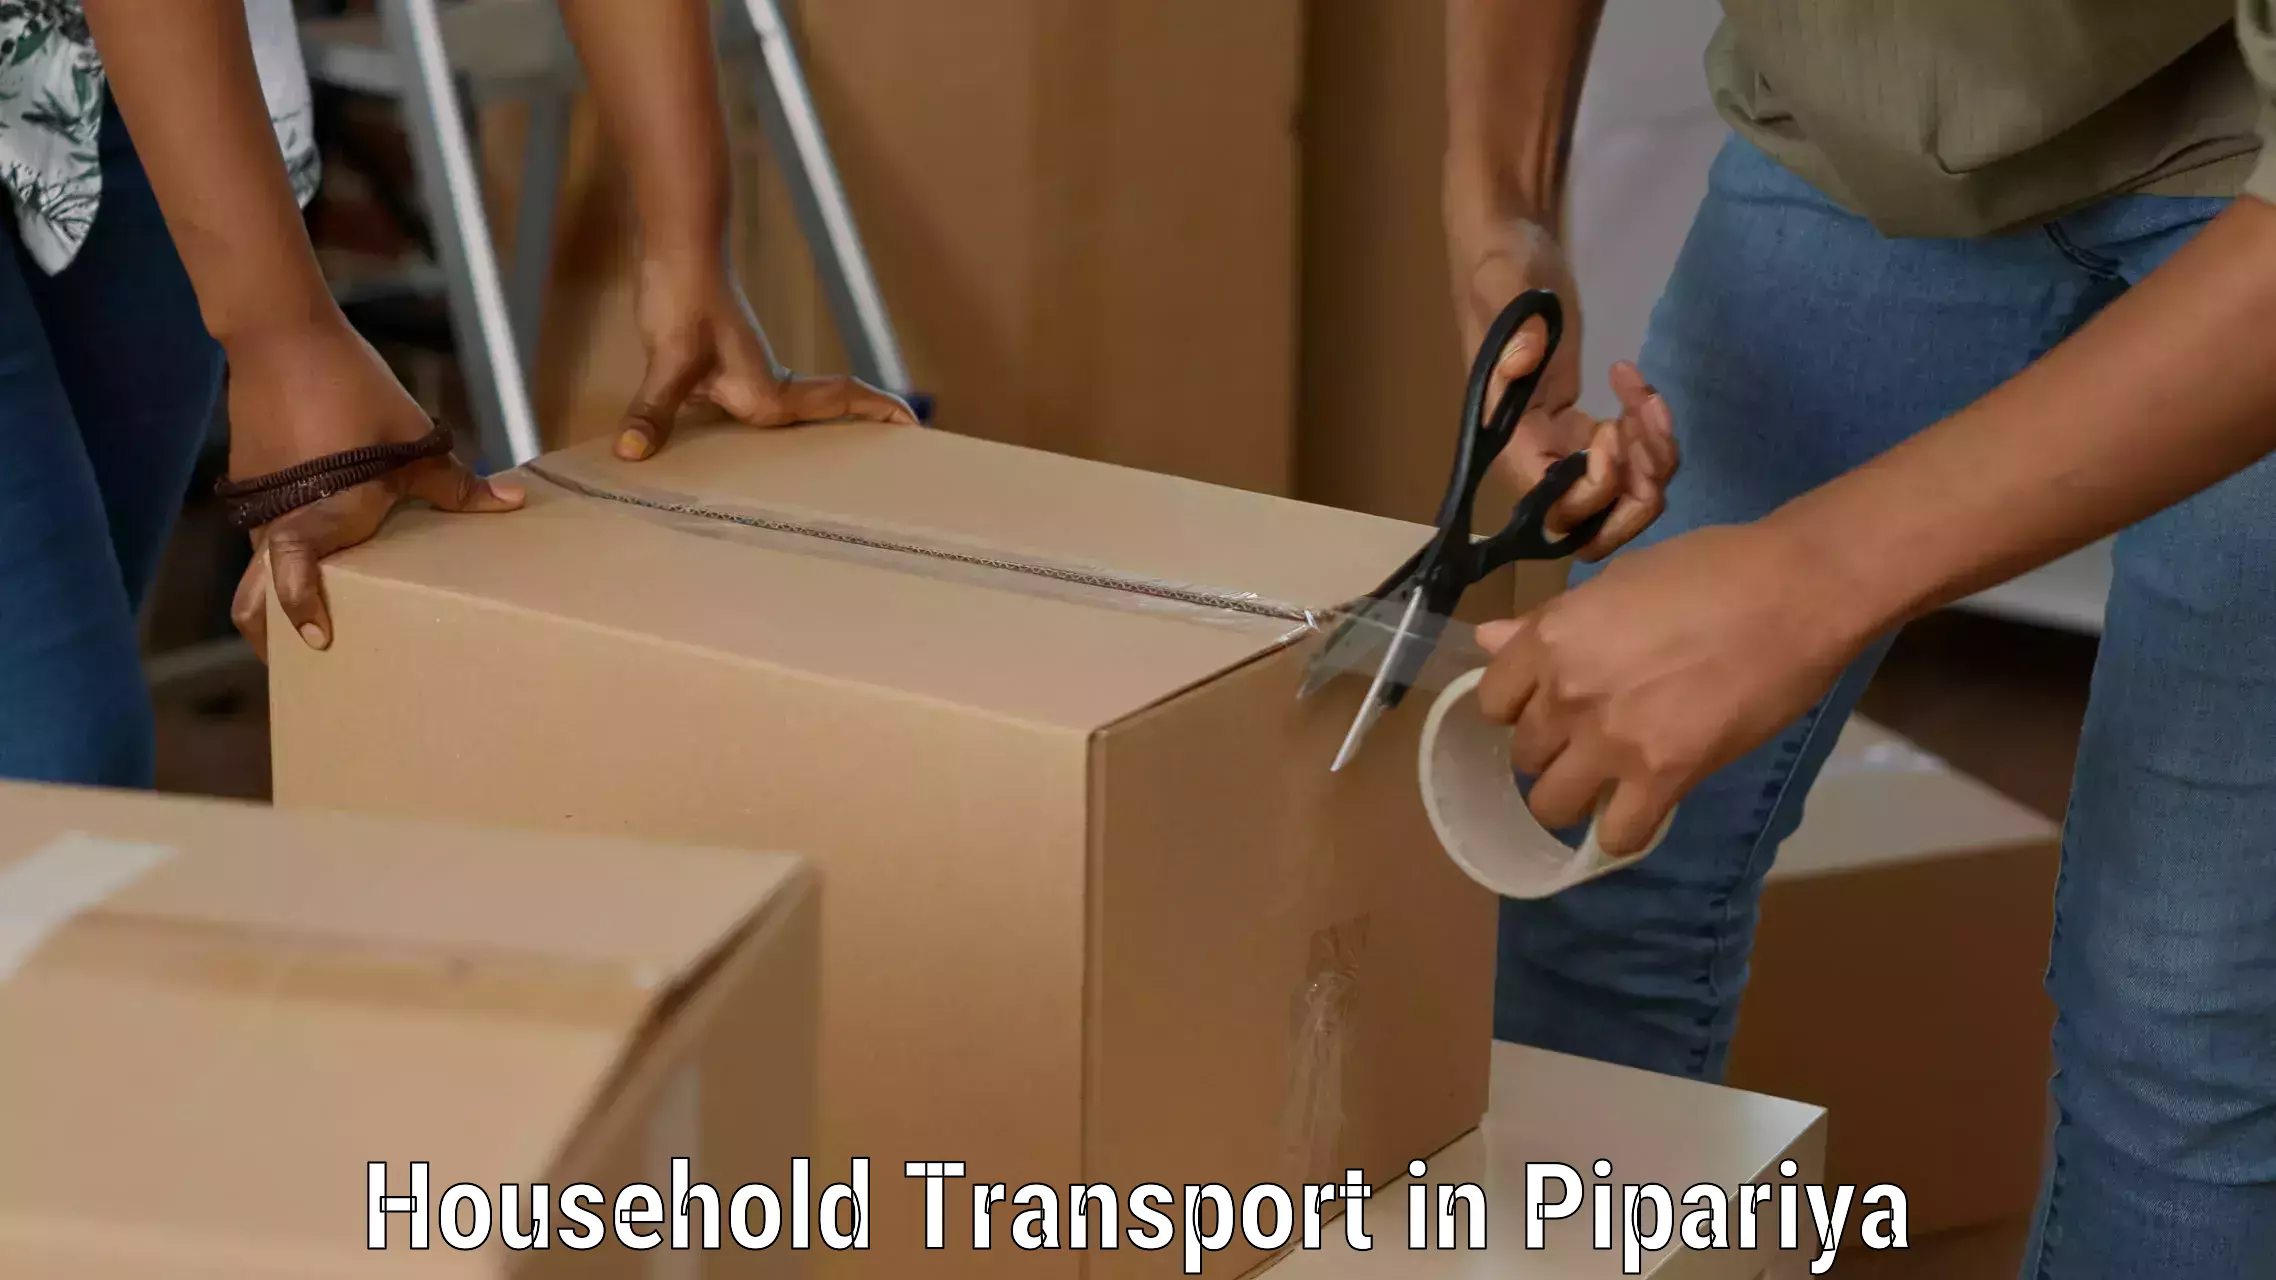 Furniture transport service in Pipariya